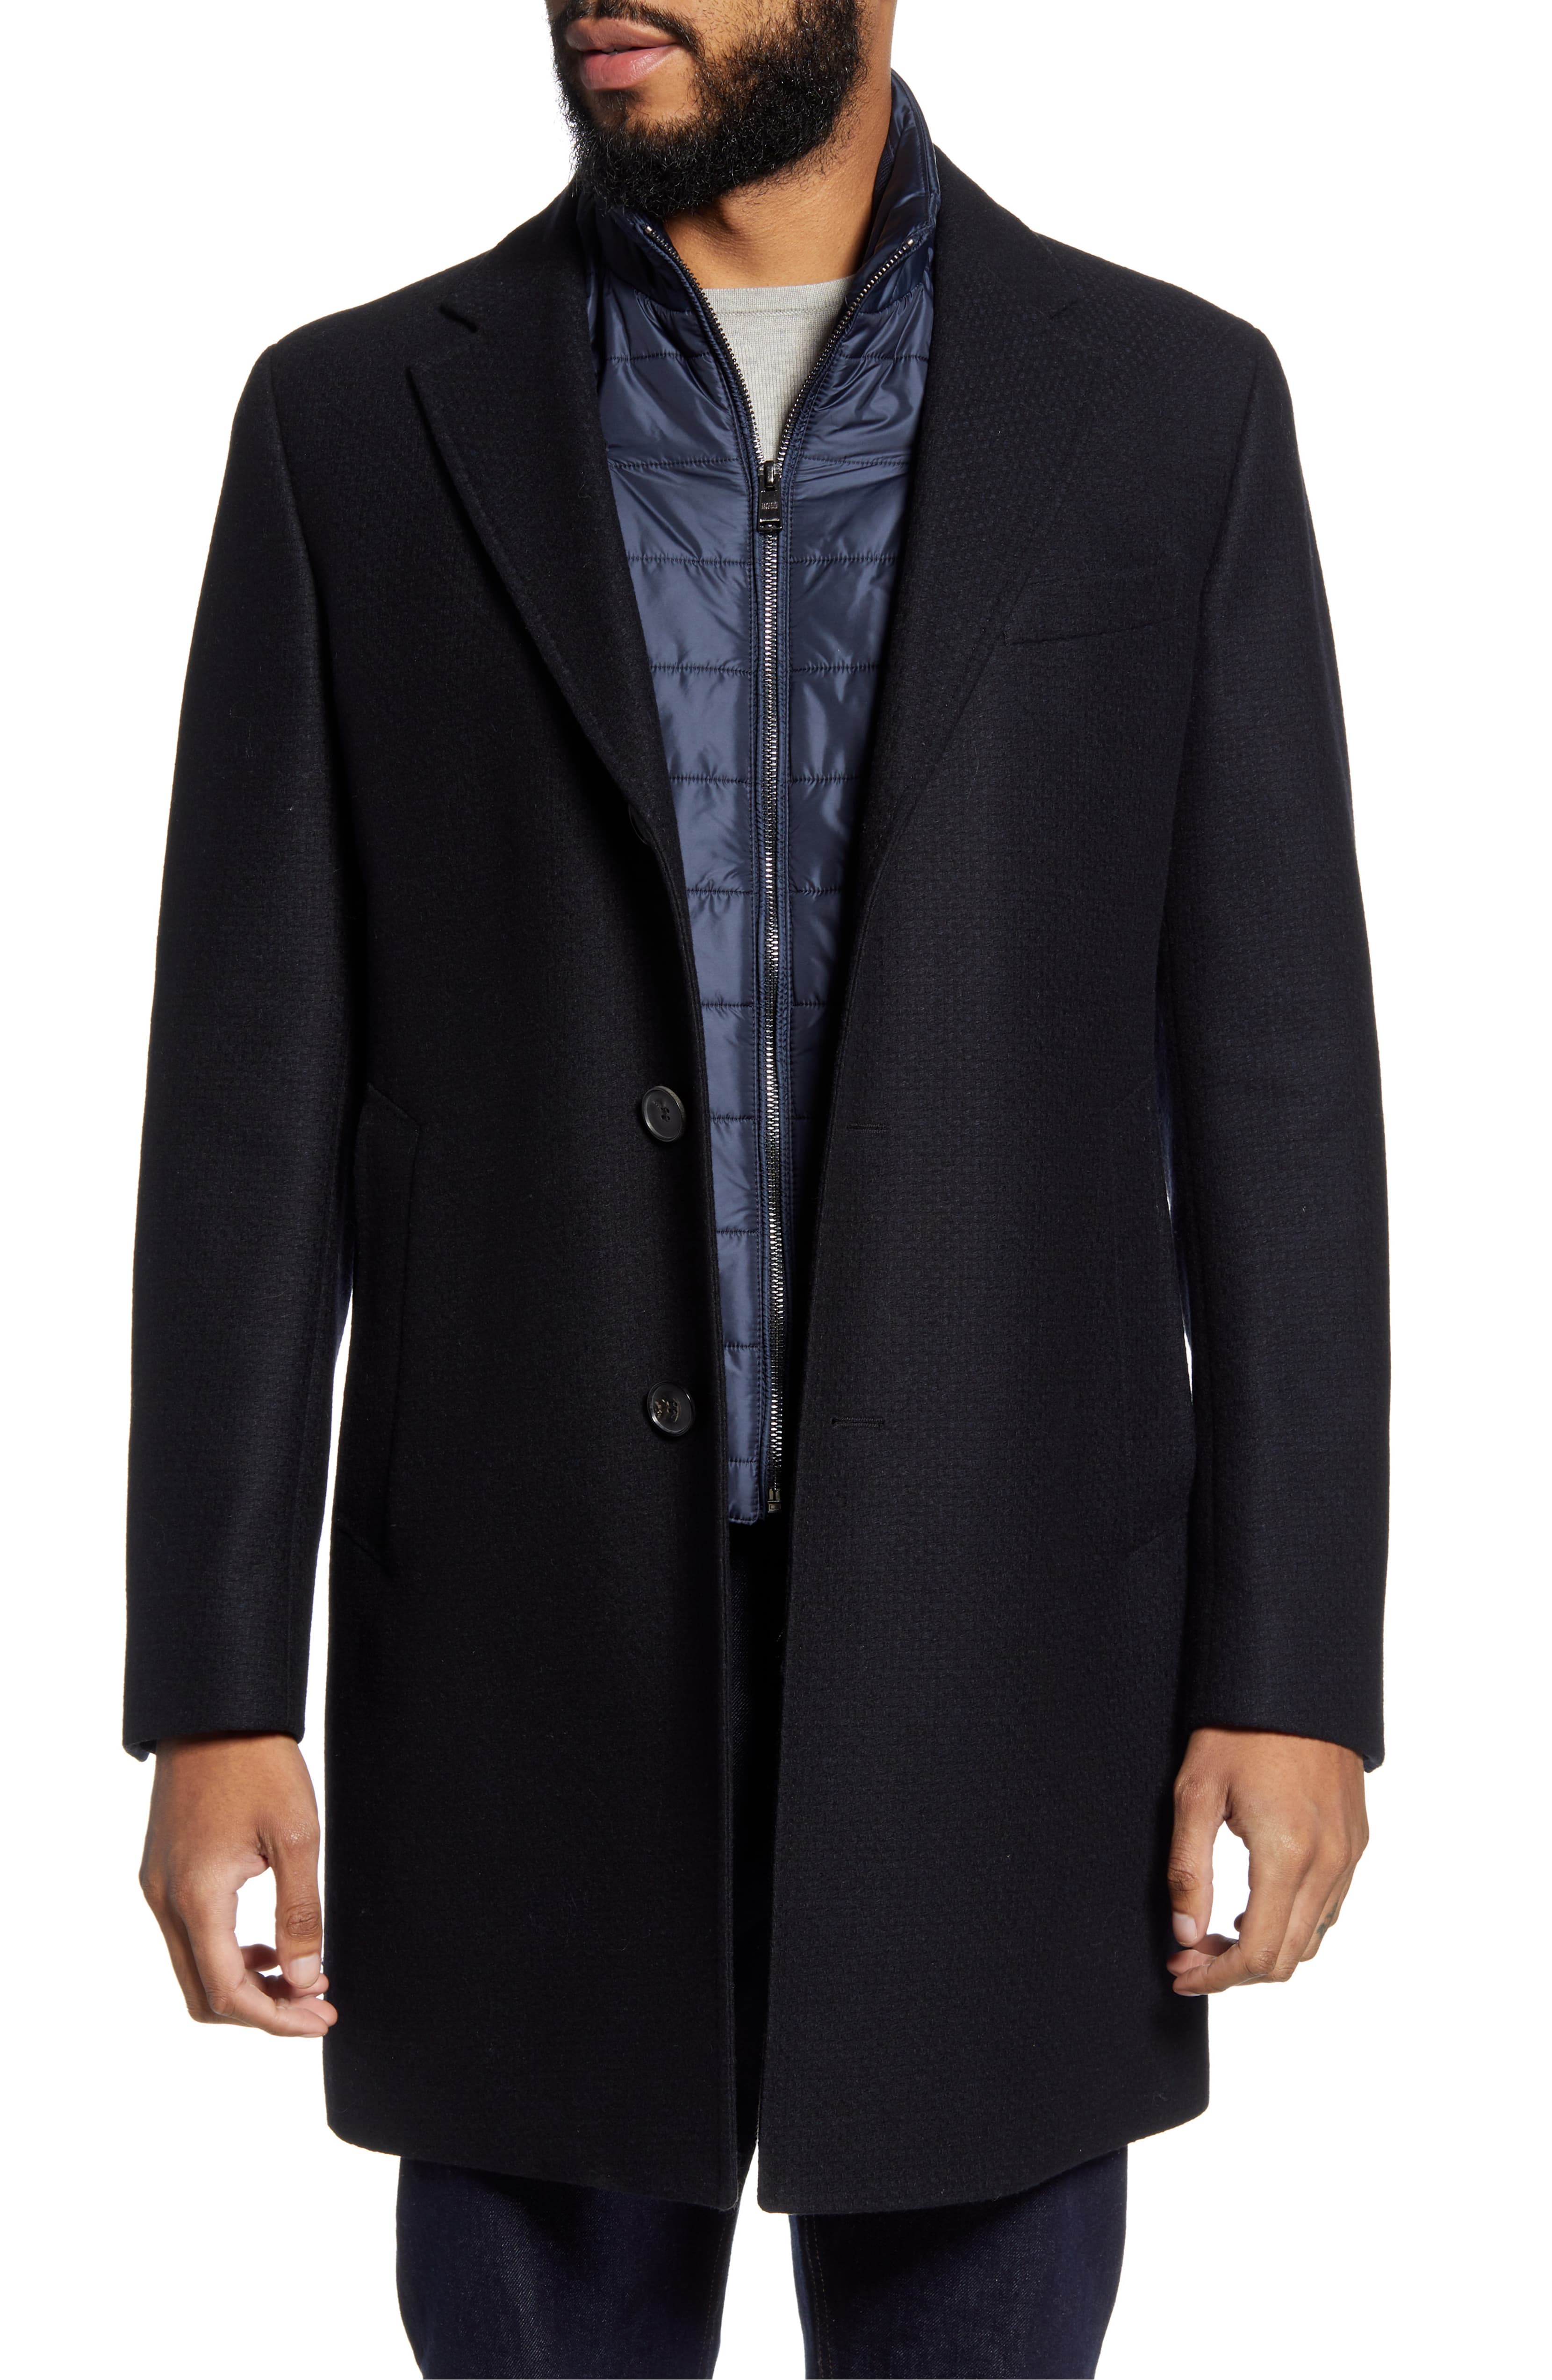 Hugo Boss Men's Nadim Zip-Out Vest Slim Fit Navy Coat | eBay